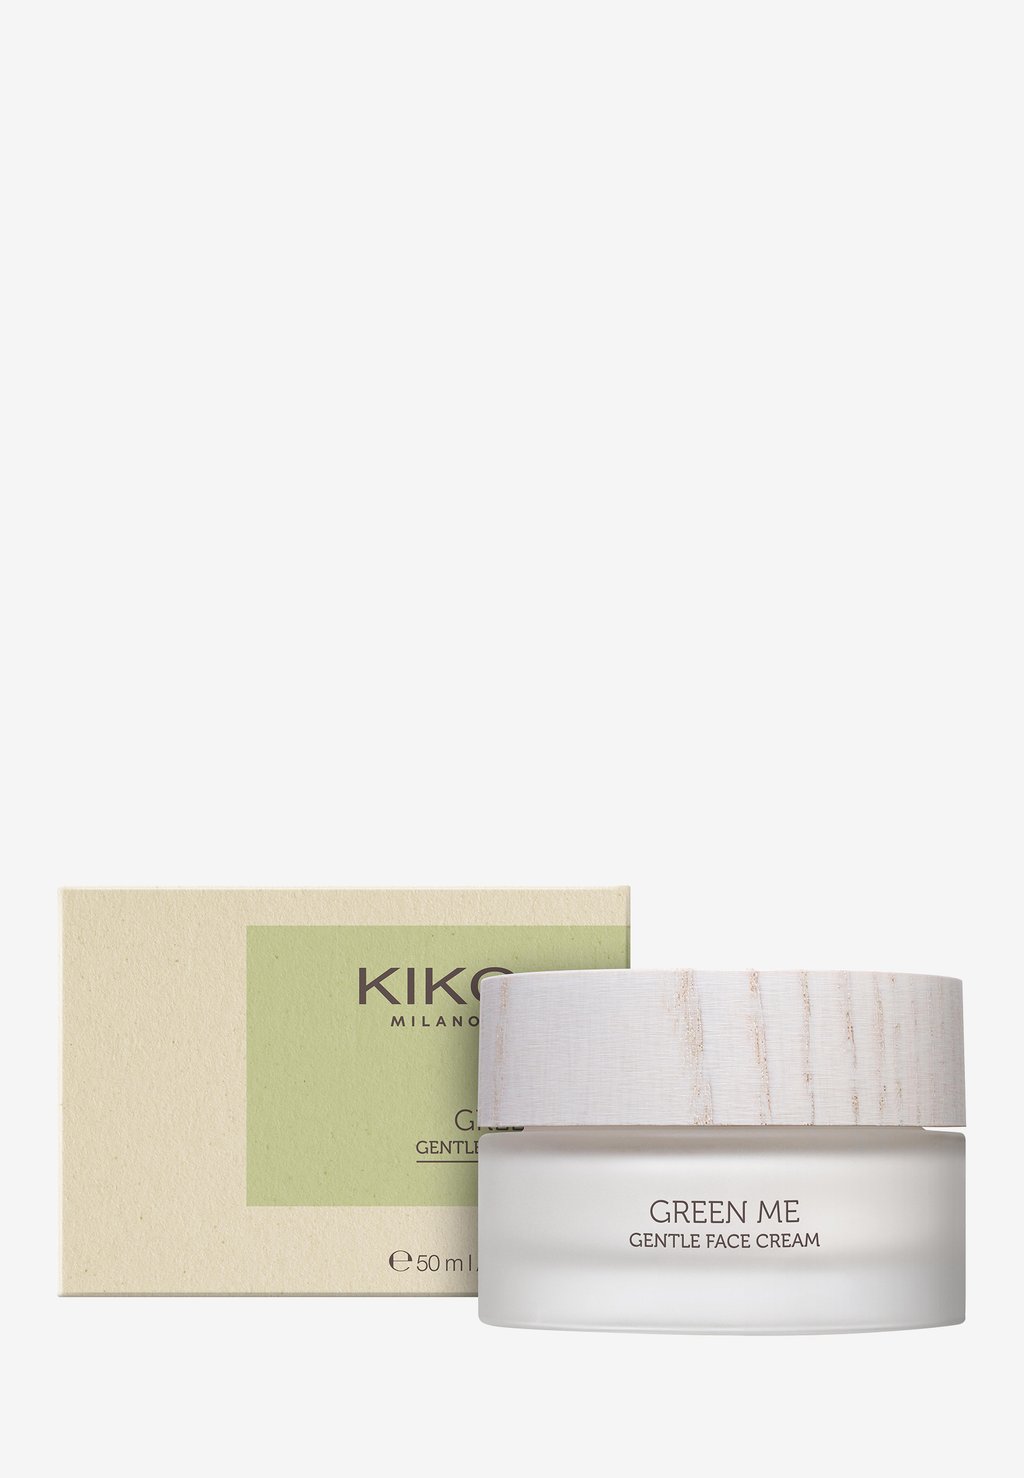 Дневной крем Green Me Gentle Face Cream KIKO Milano